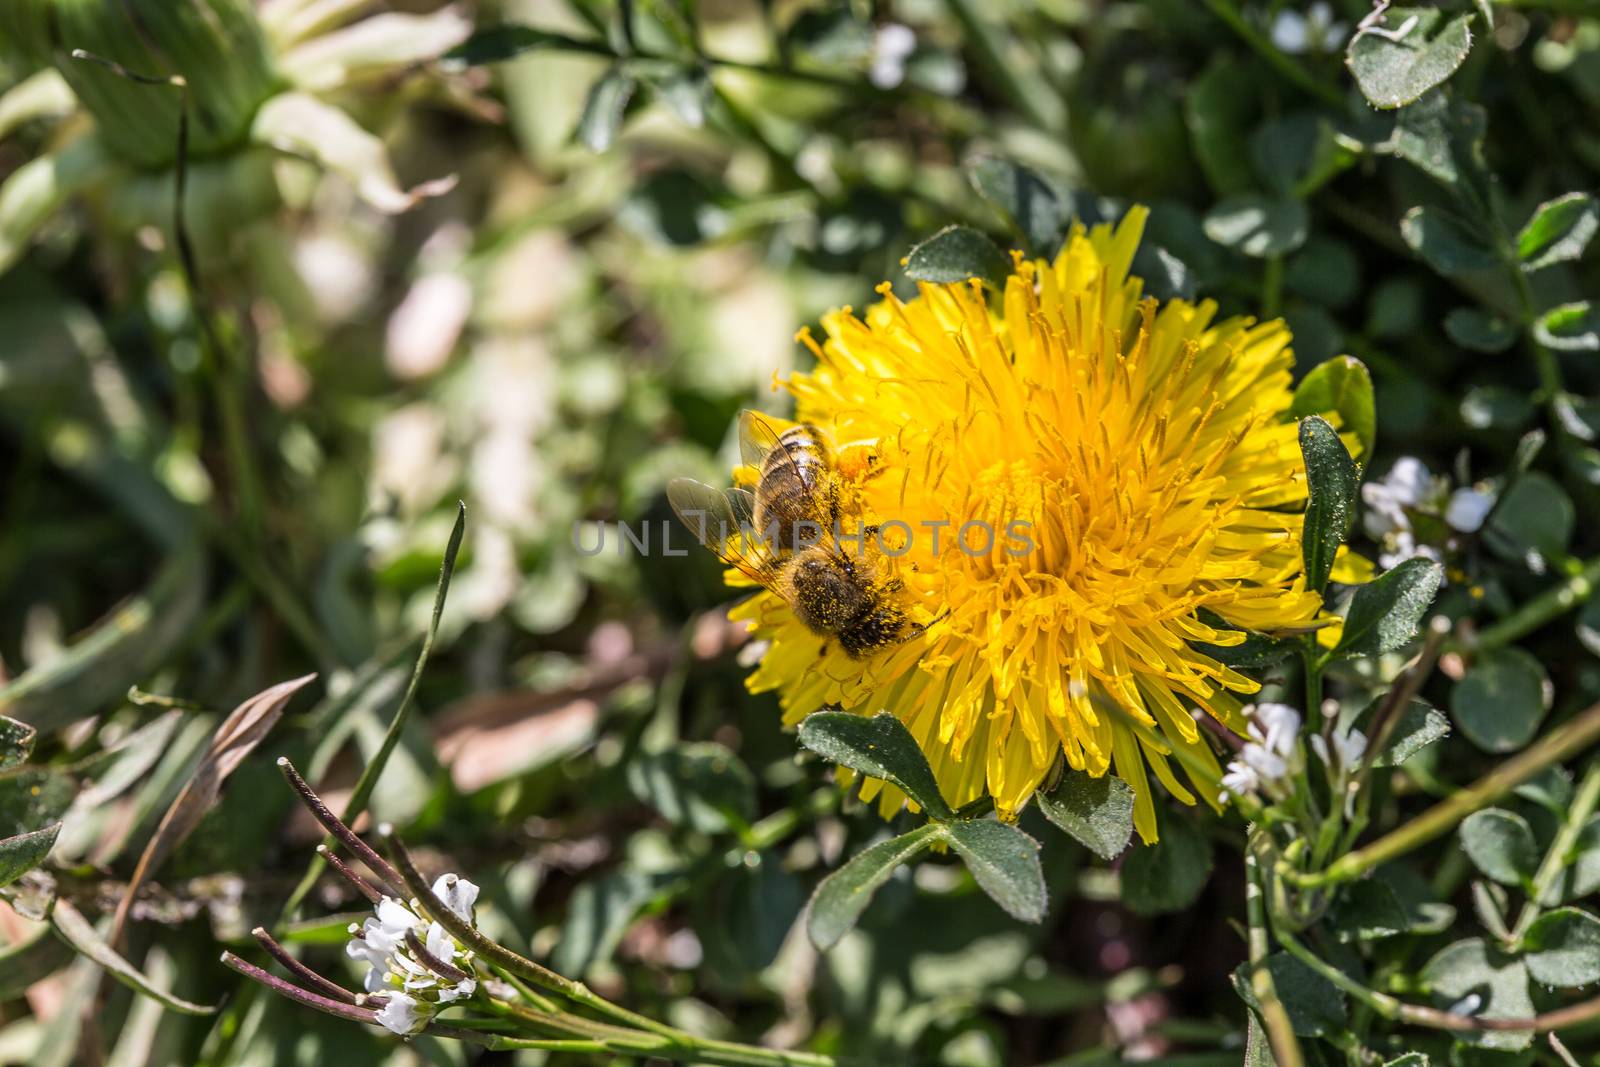 Honeybee on yellow dandelion flower